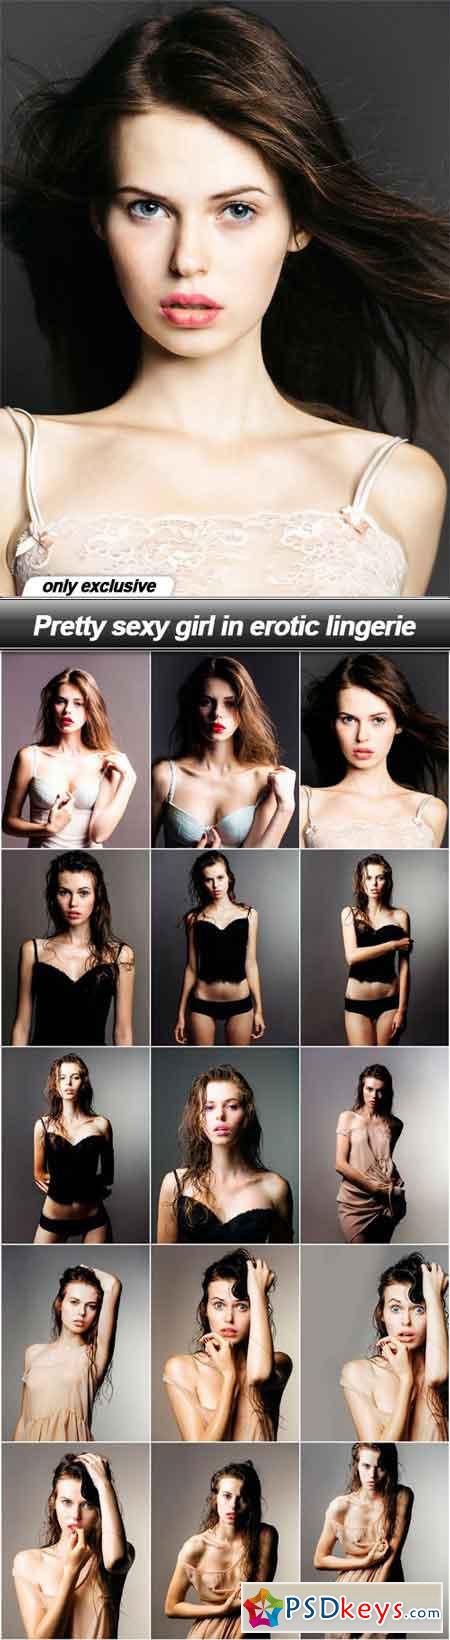 Pretty sexy girl in erotic lingerie - 15 UHQ JPEG